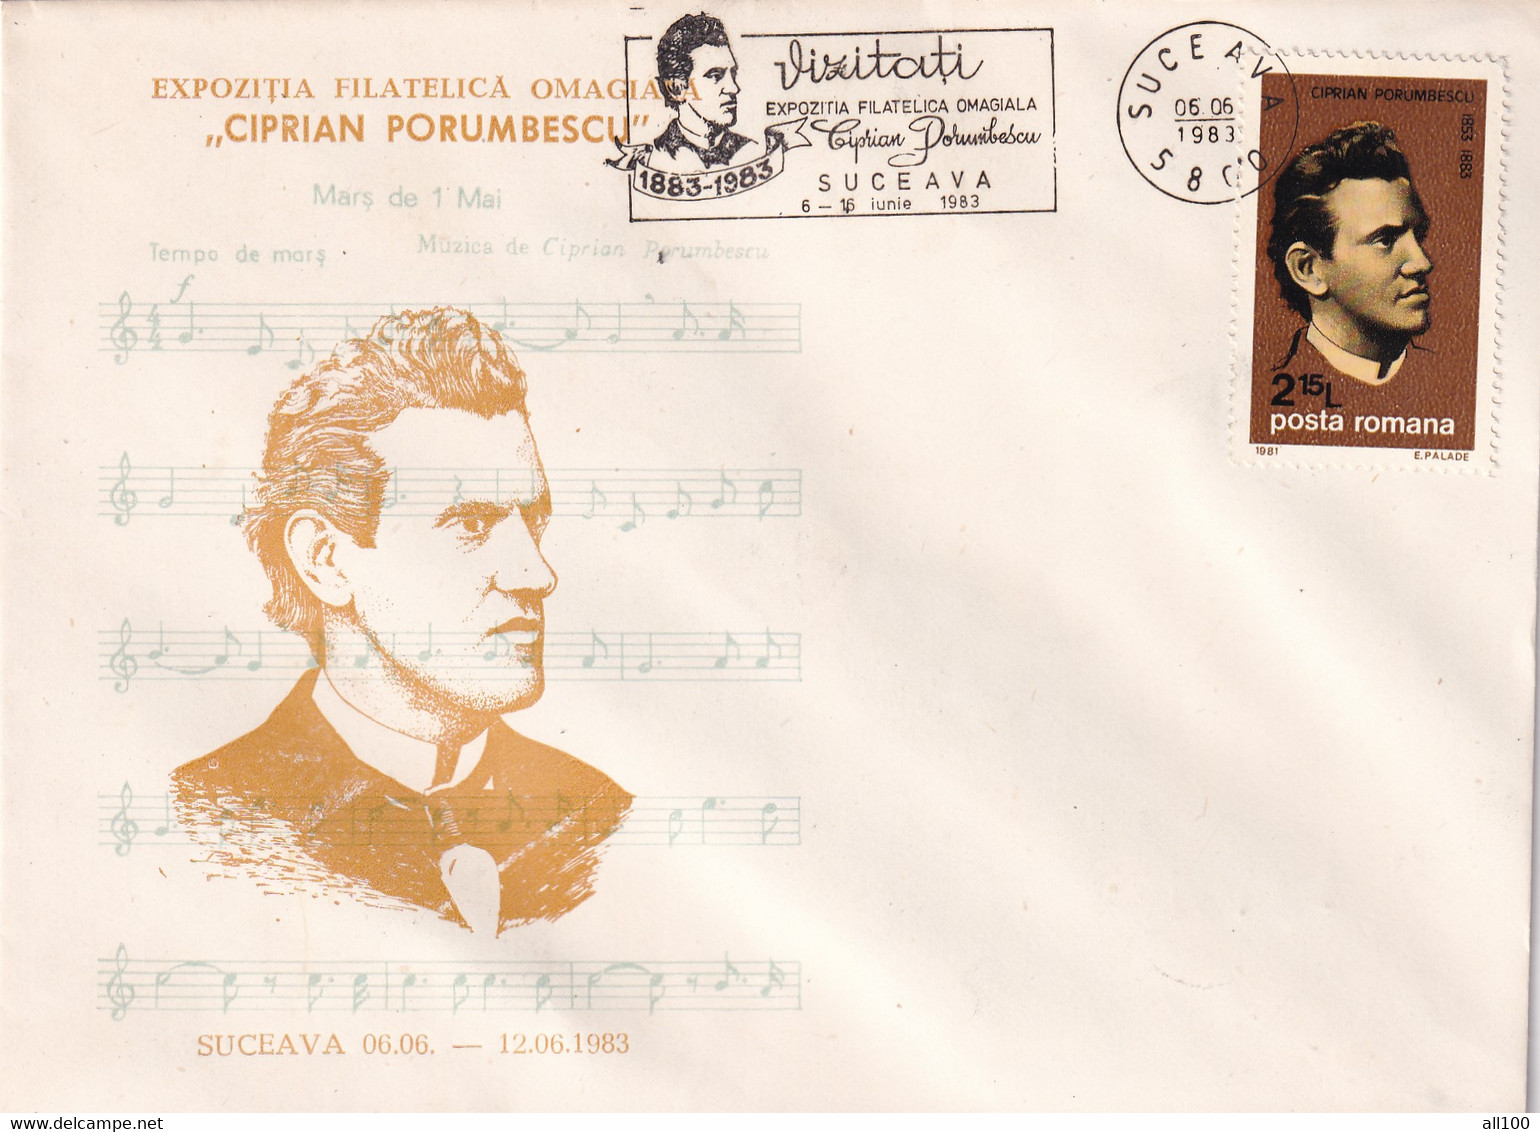 A21953 - Expozitia Filatelica Omagiala Ciprian Porumbescu Mars De 1 Mai Suceava Cover Envelope Unused 1983 RS Romania - Briefe U. Dokumente